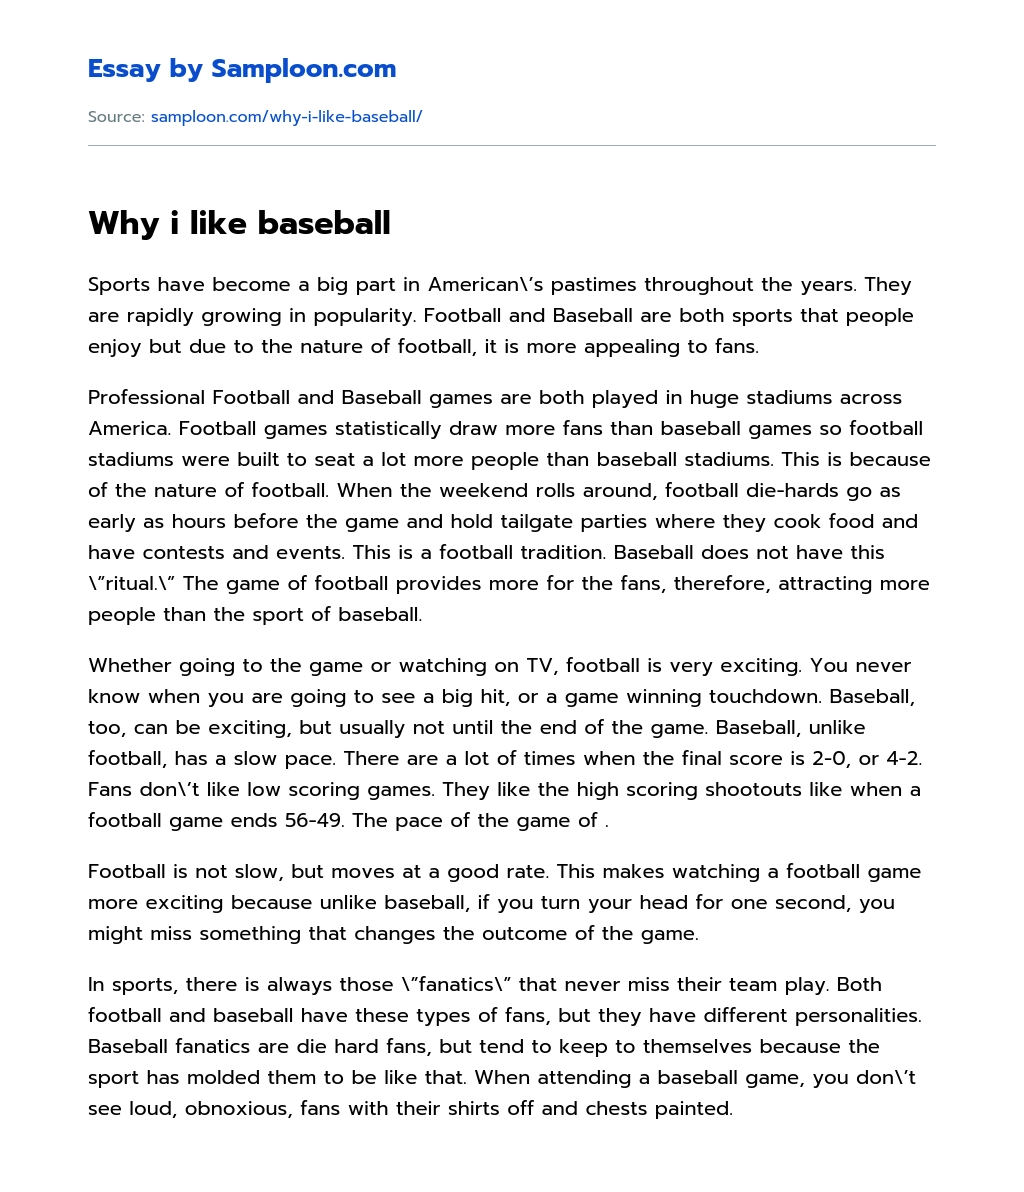 Why i like baseball essay